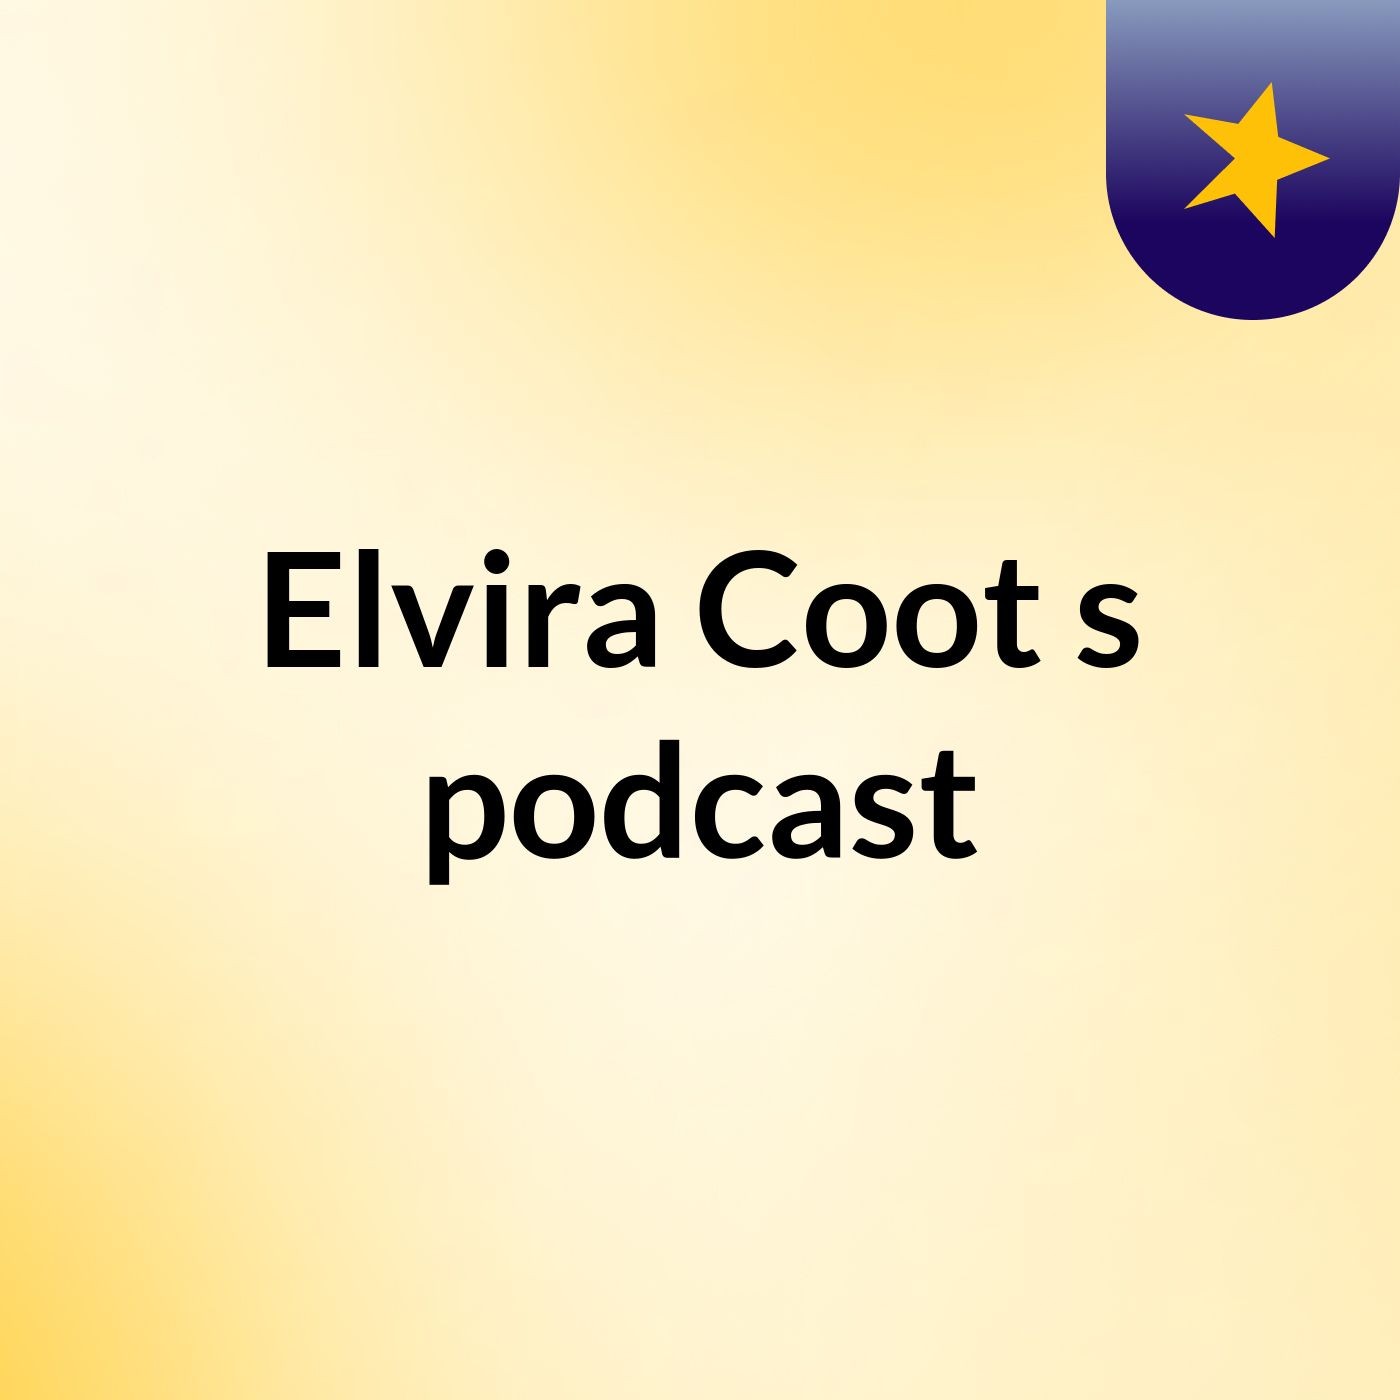 Episode 17 - Elvira Coot's podcast